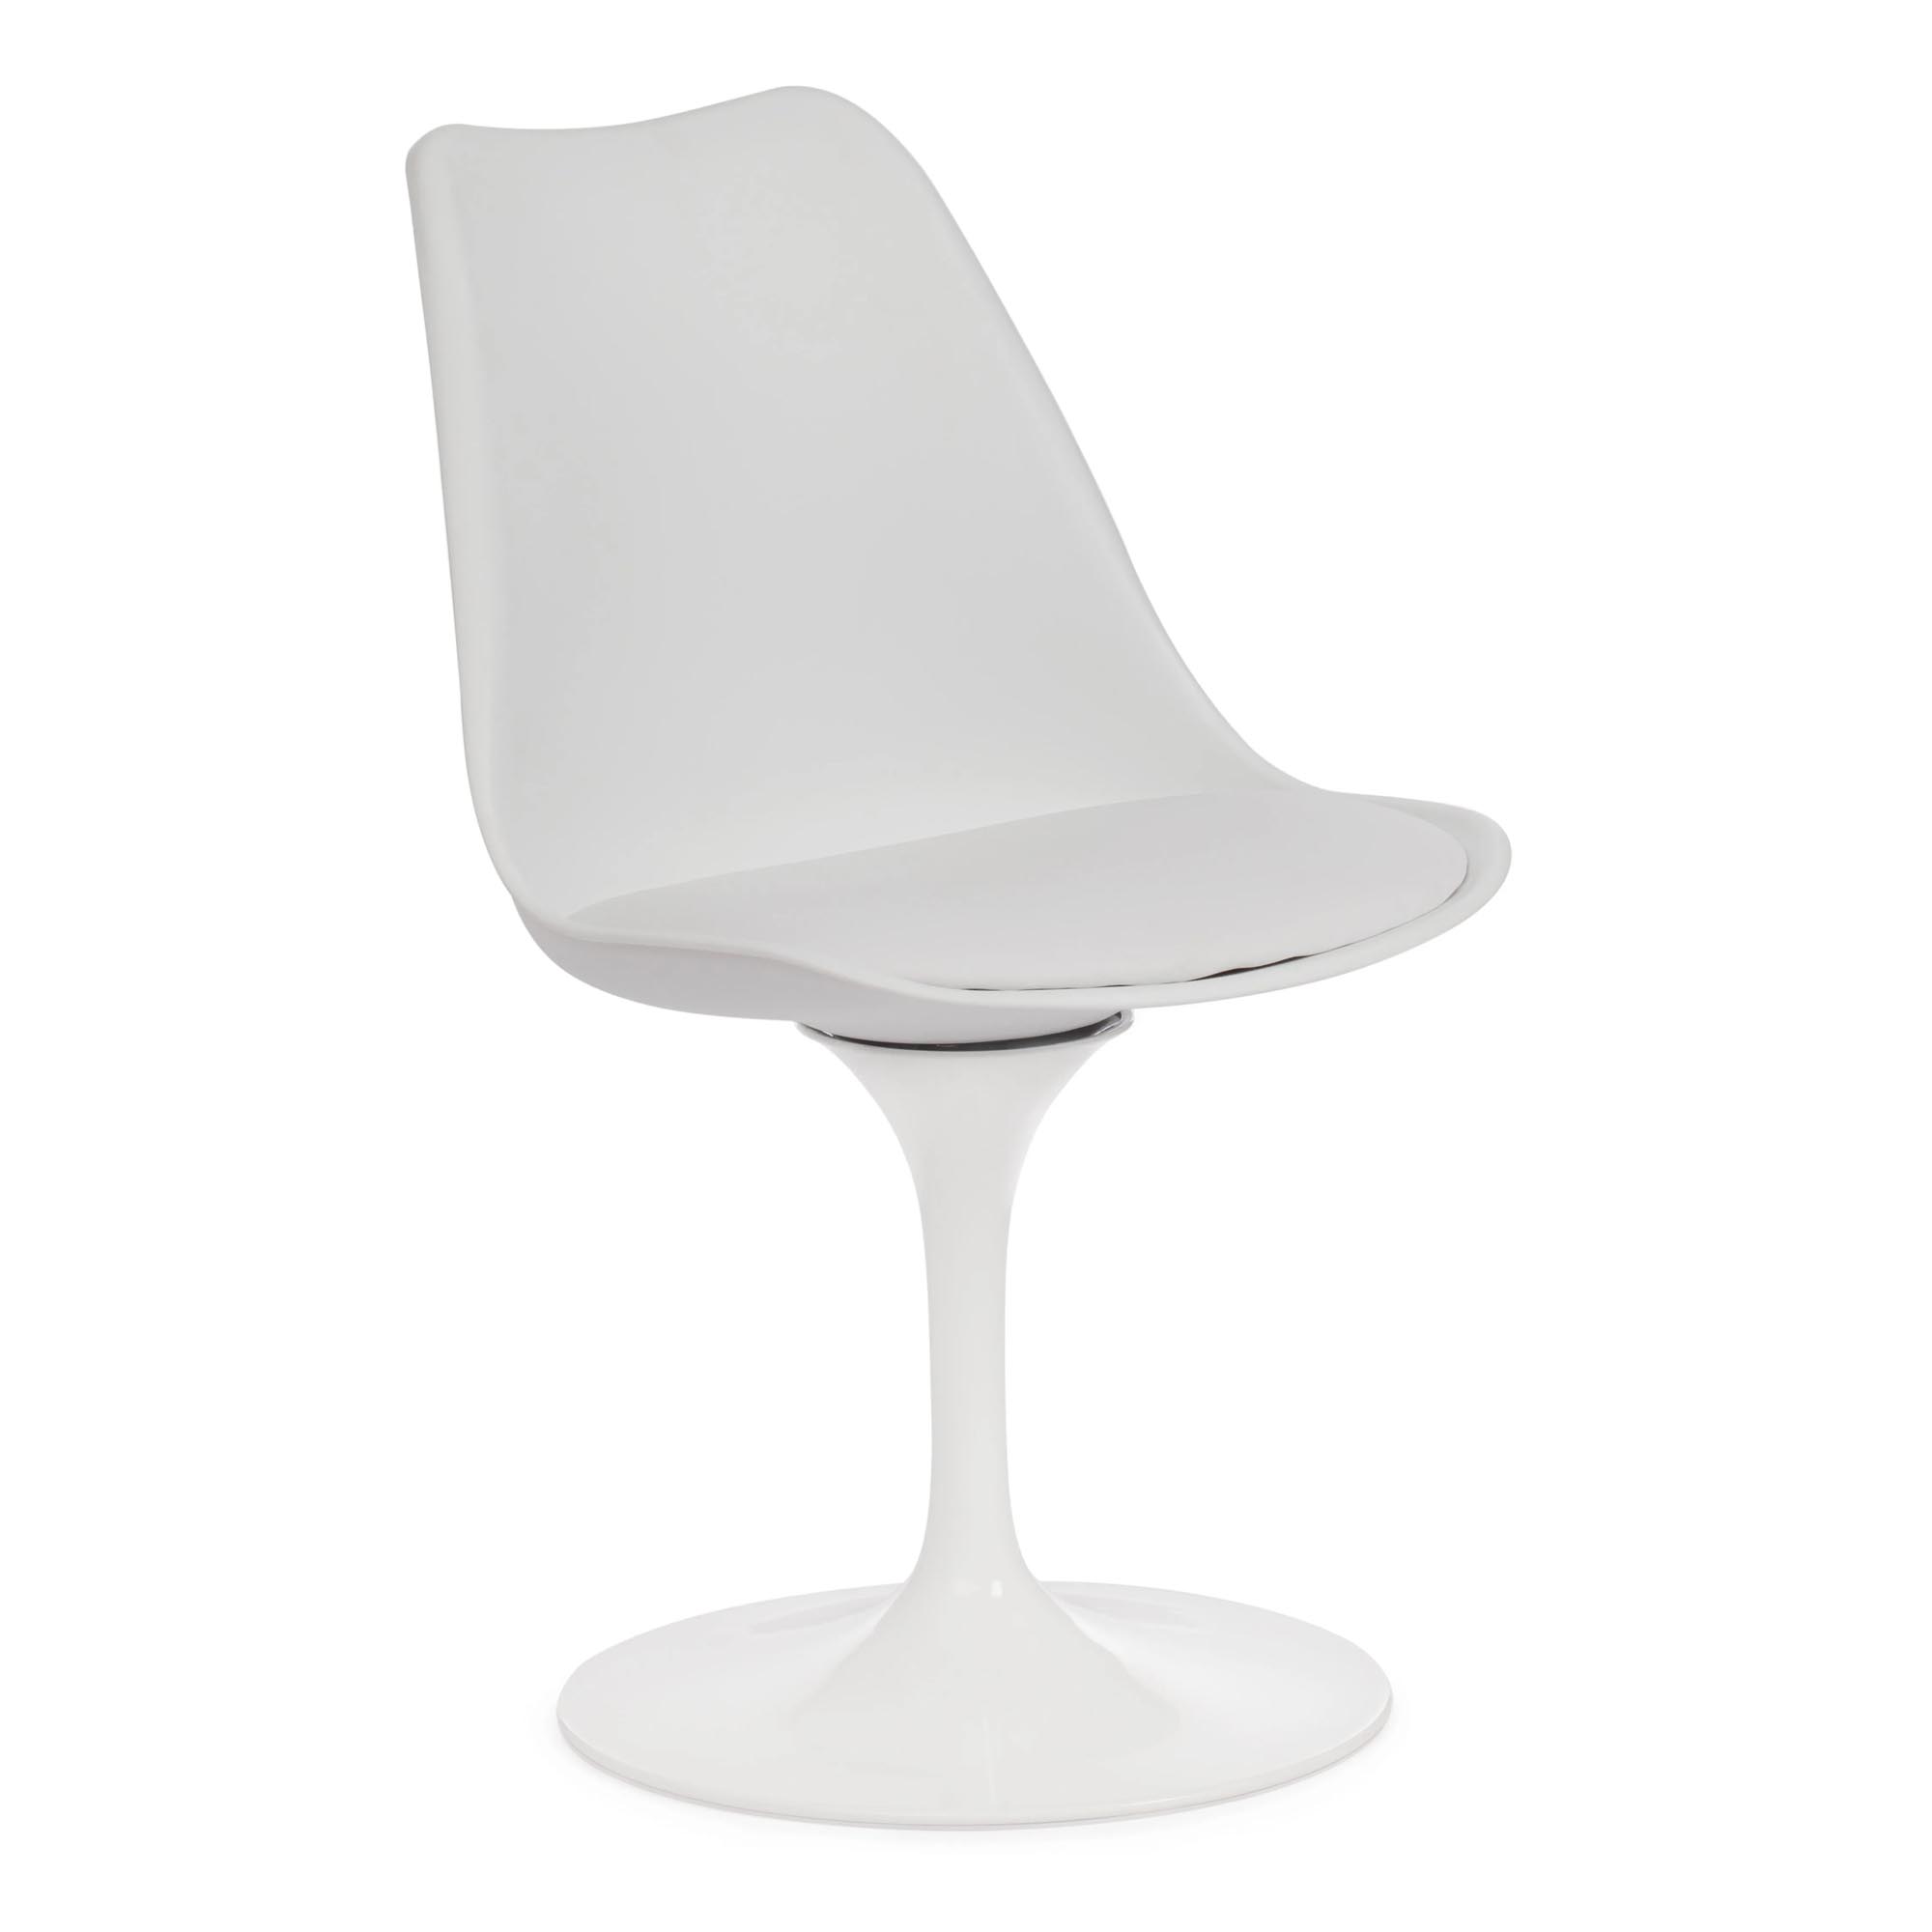 премиум эргономичное кресло gt chair marrit x Стул TC Tulip fashion chair 55x48x81 см белый